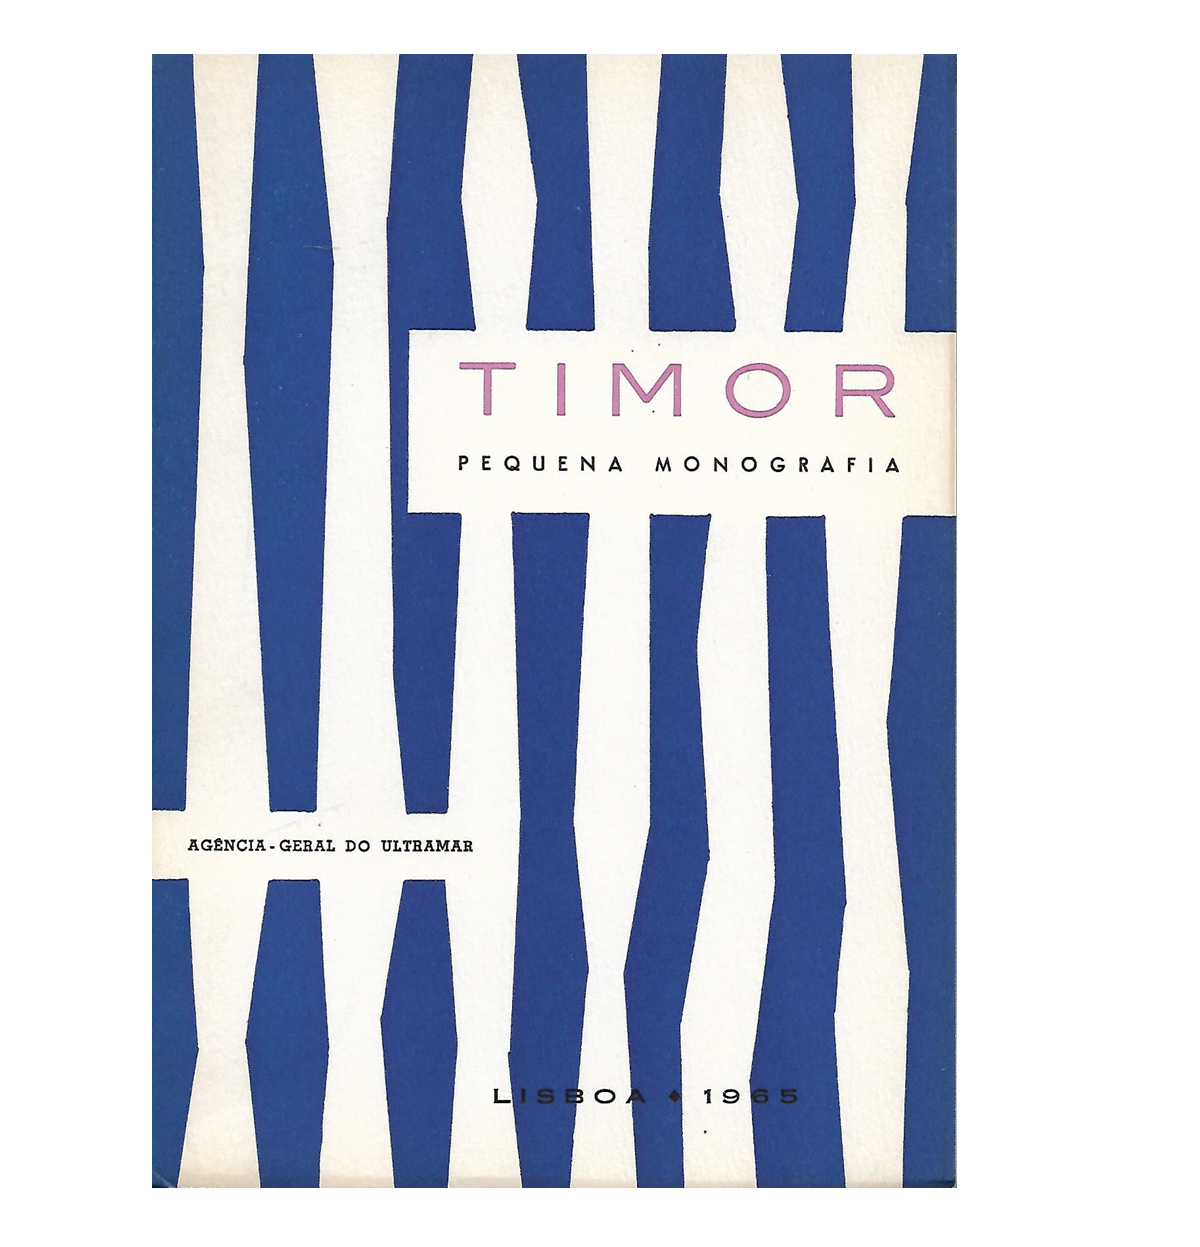 TIMOR. Pequena Monografia